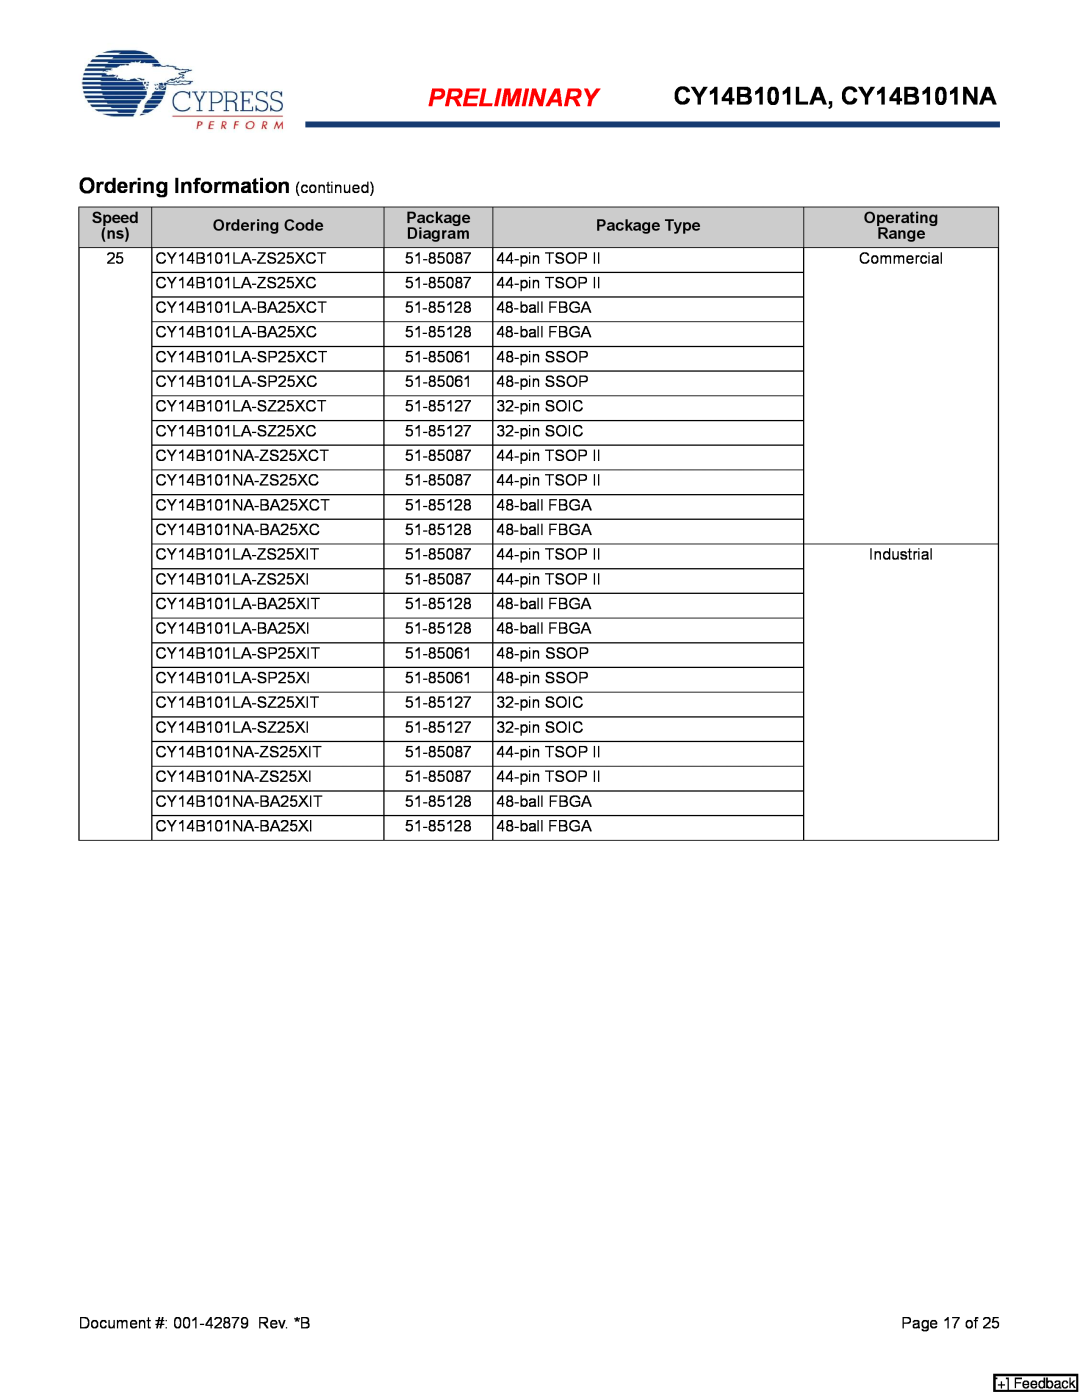 Cypress manual Ordering Information continued, Preliminary, CY14B101LA, CY14B101NA 